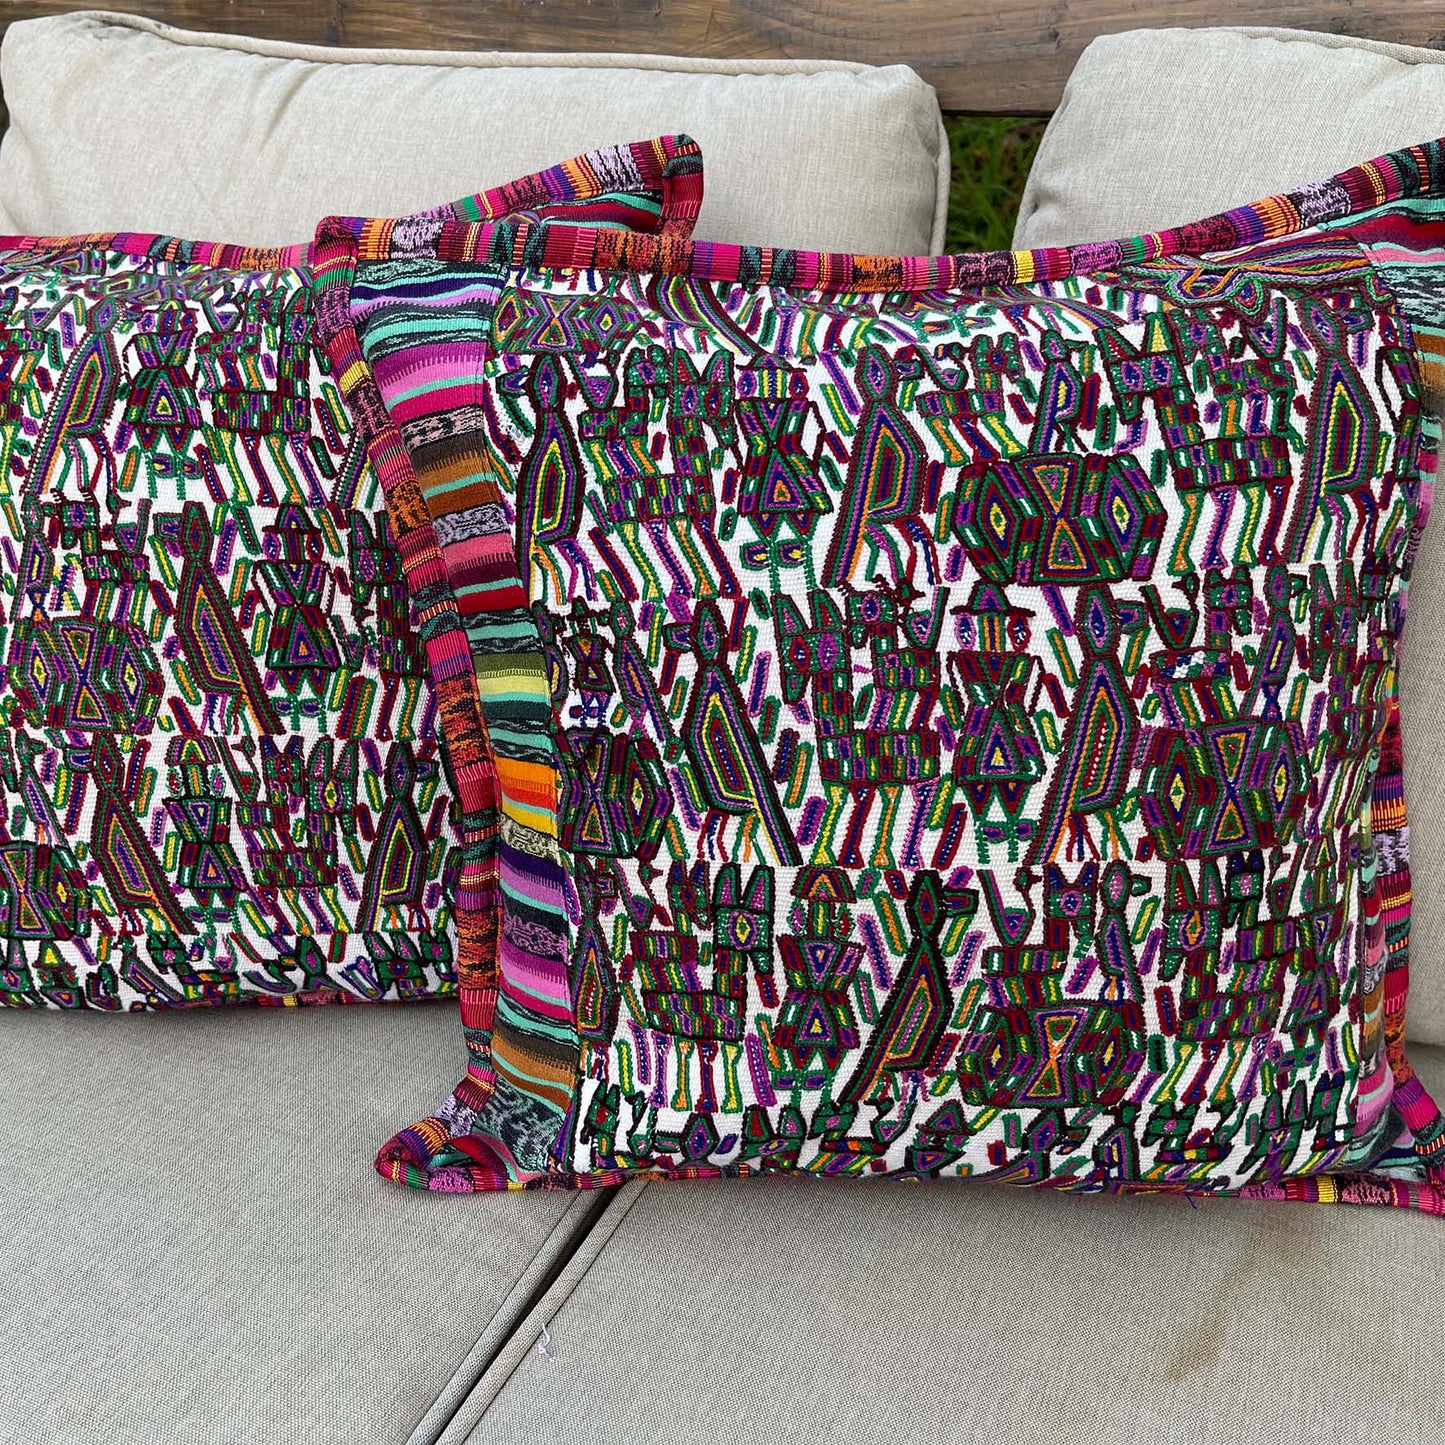 Guatemalan Artisan Huipil Pillow Covers from Nebaj Quiche